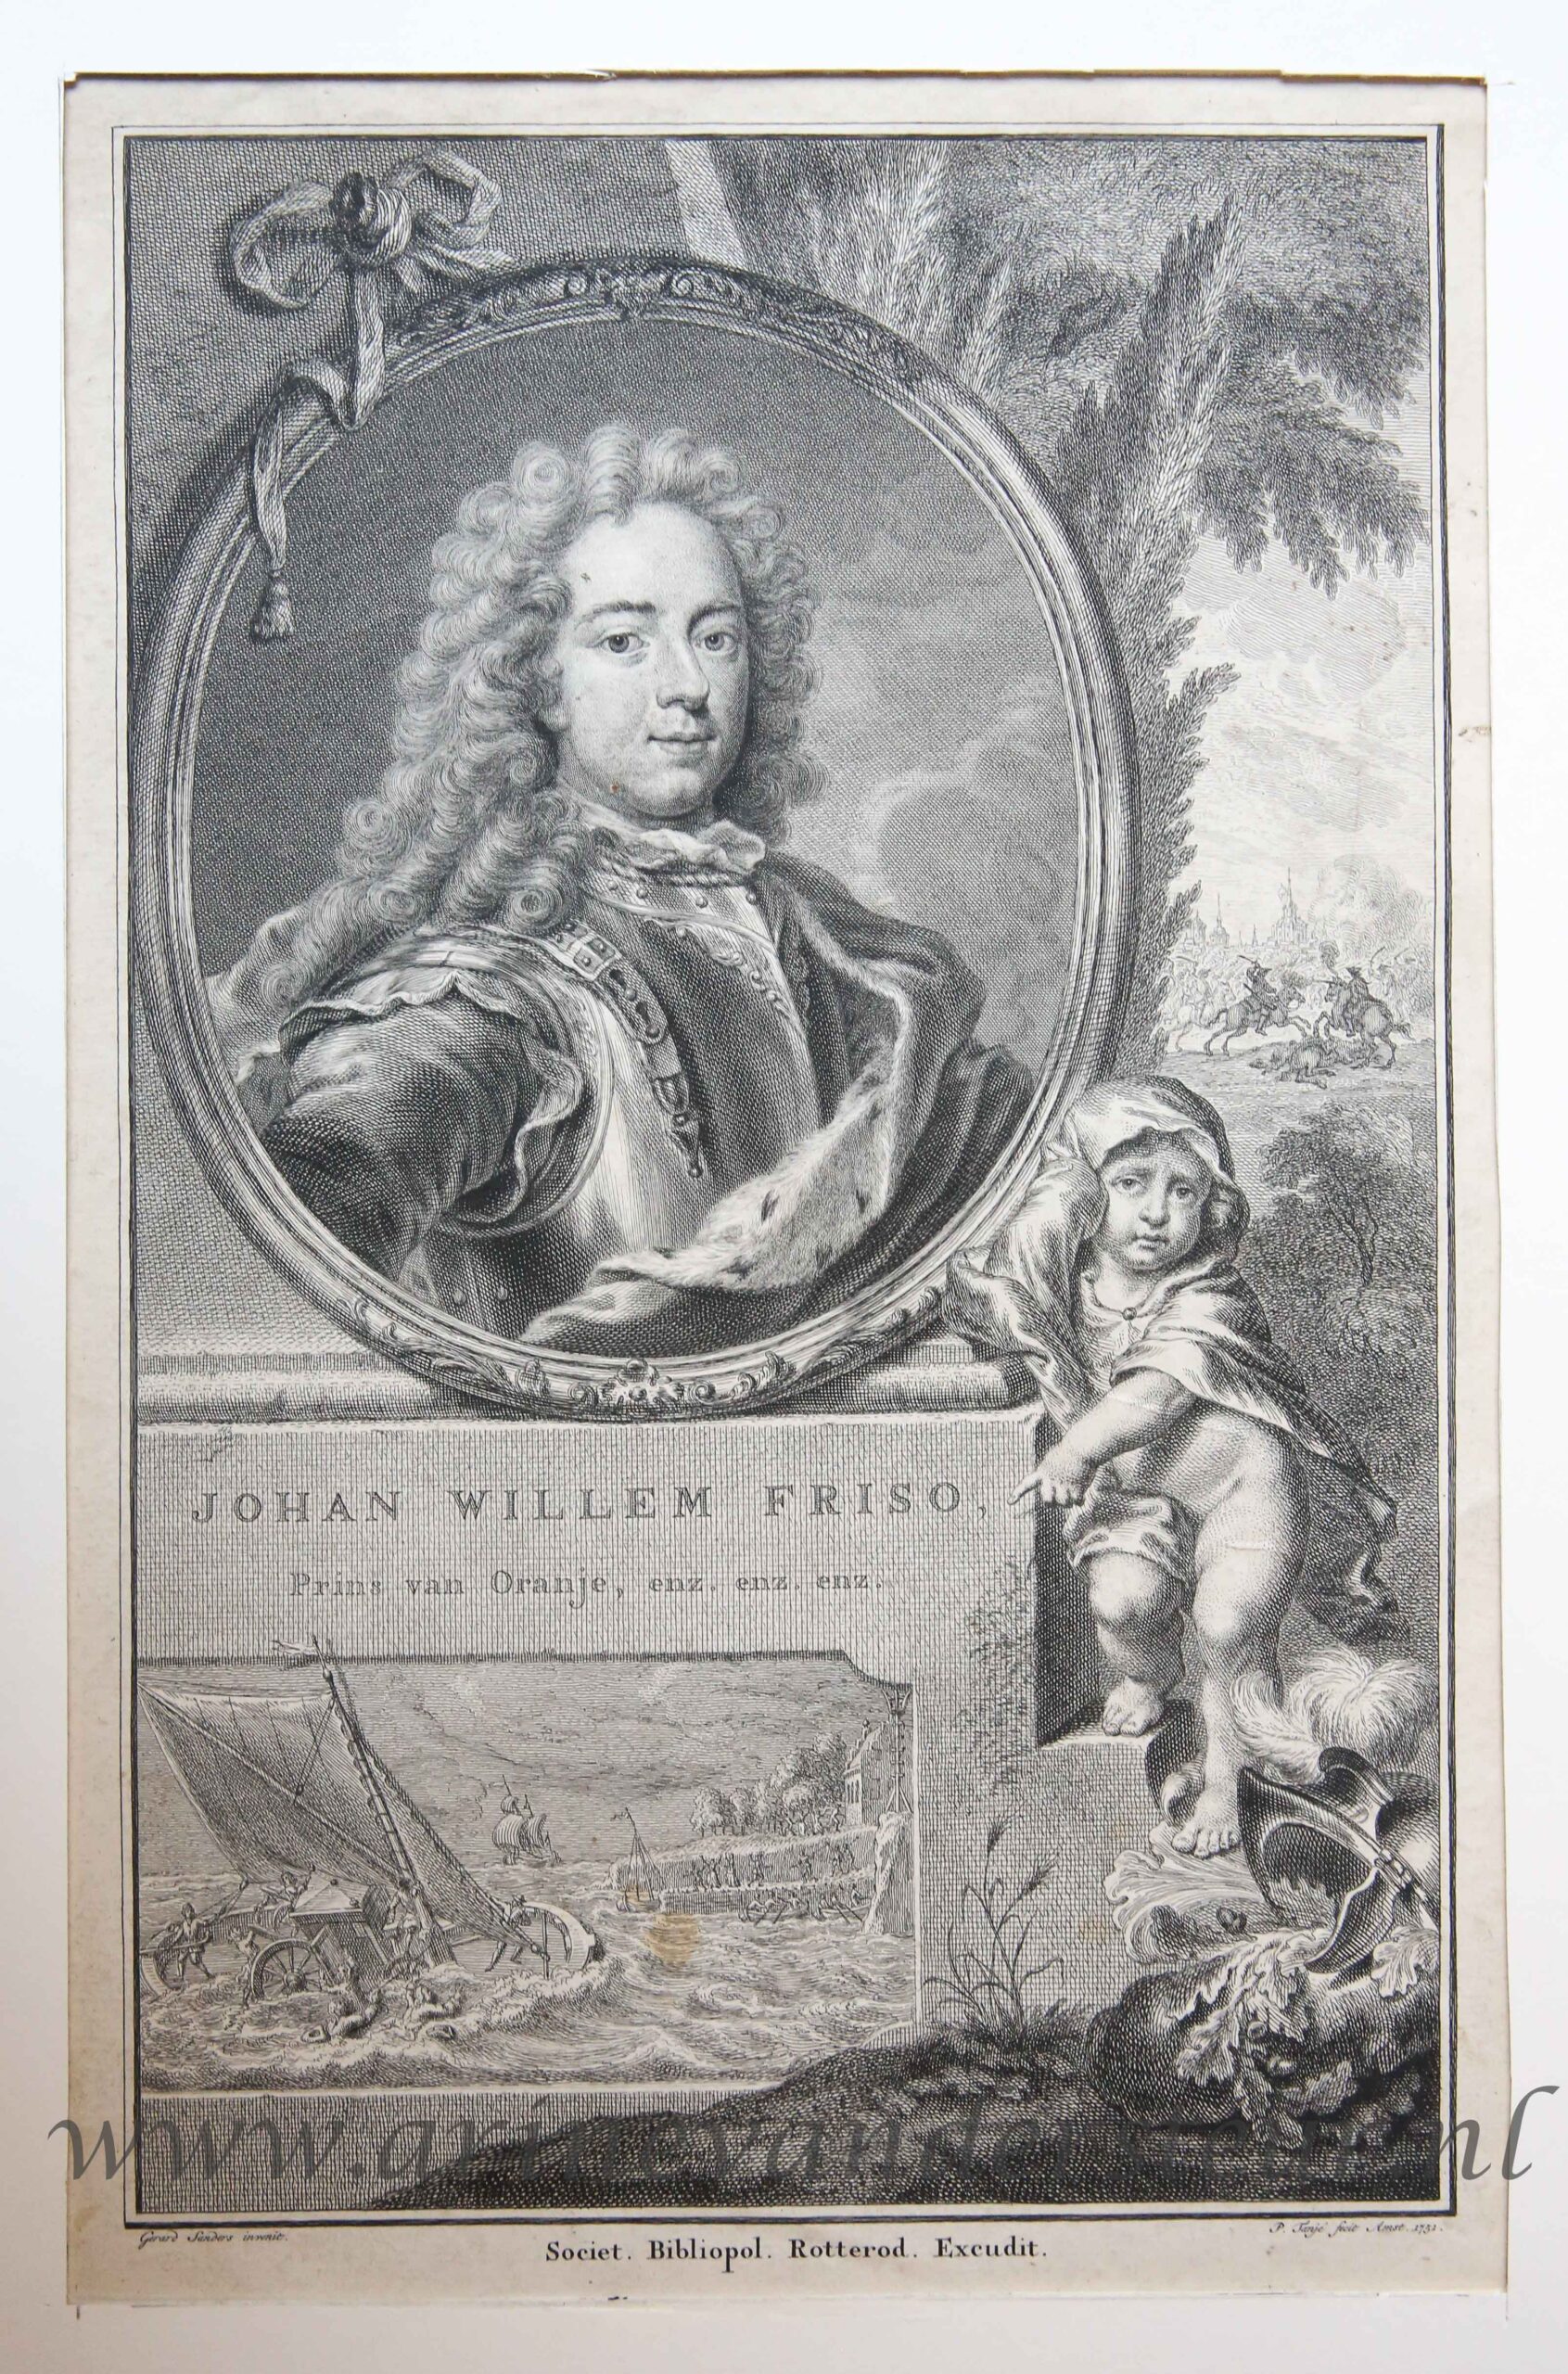 [Original etching and engraving] JOHAN WILLEM FRISO, Prins van Oranje, enz. enz. enz., 1751.